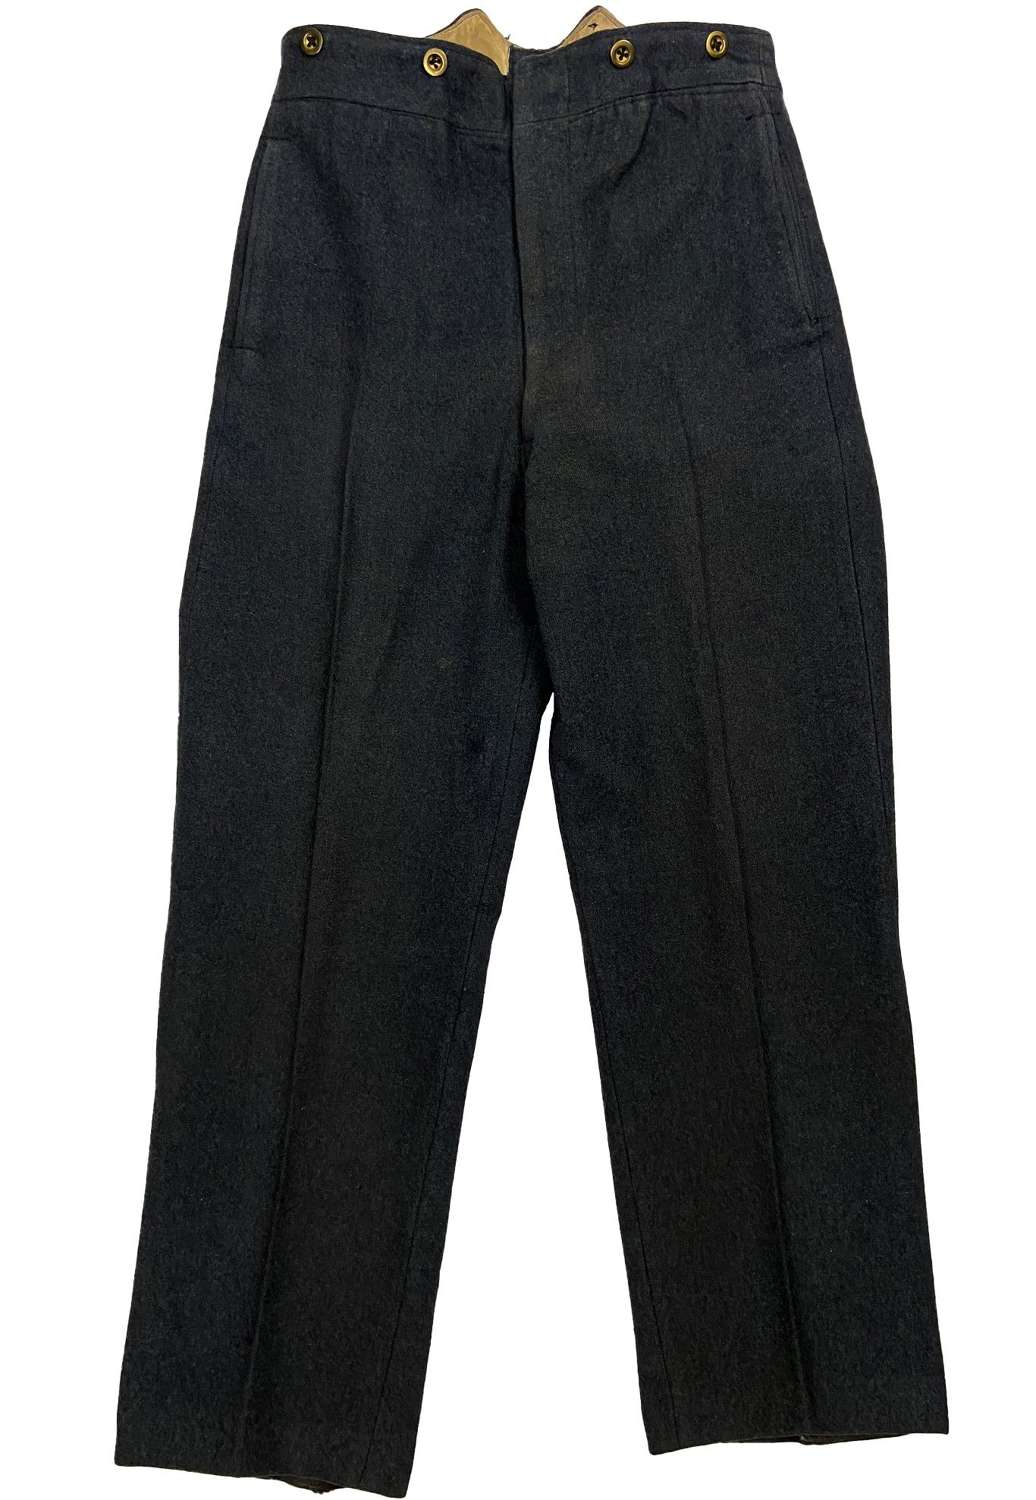 Original 1942 Dated RAF Ordinary Airman's Trousers